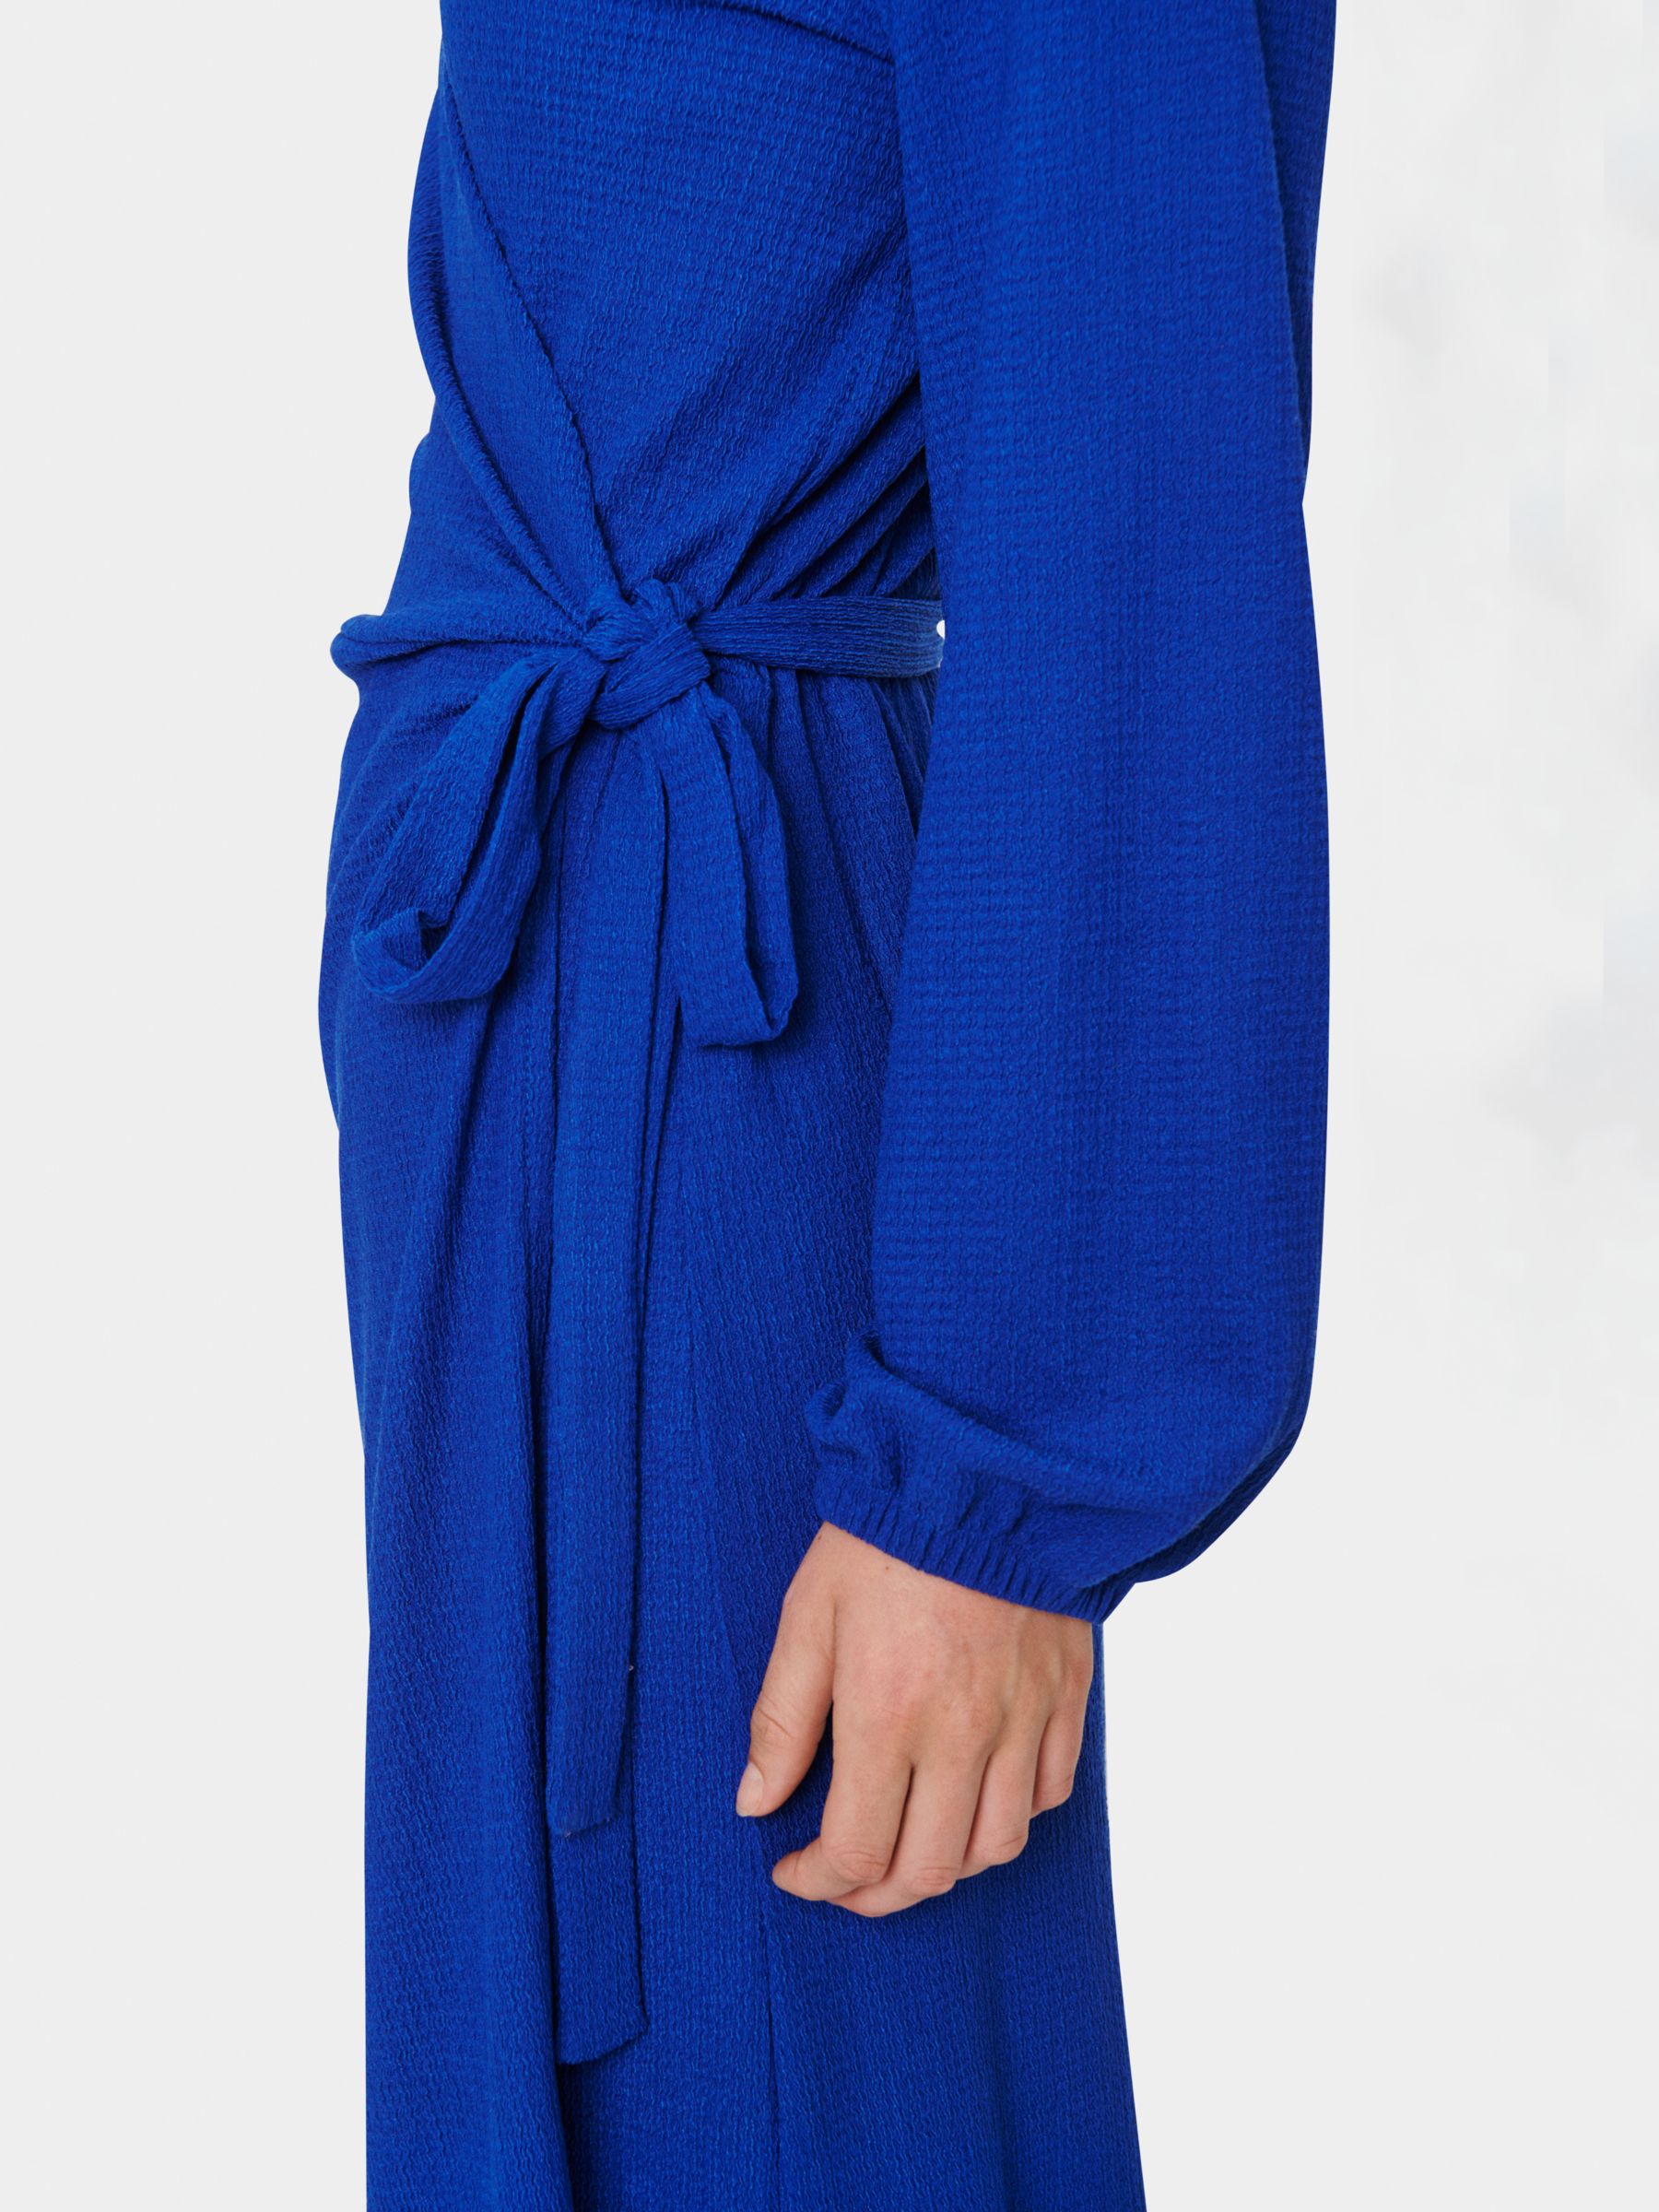 Saint Tropez Shila Wrap Midi Dress, Surf Blue, XS